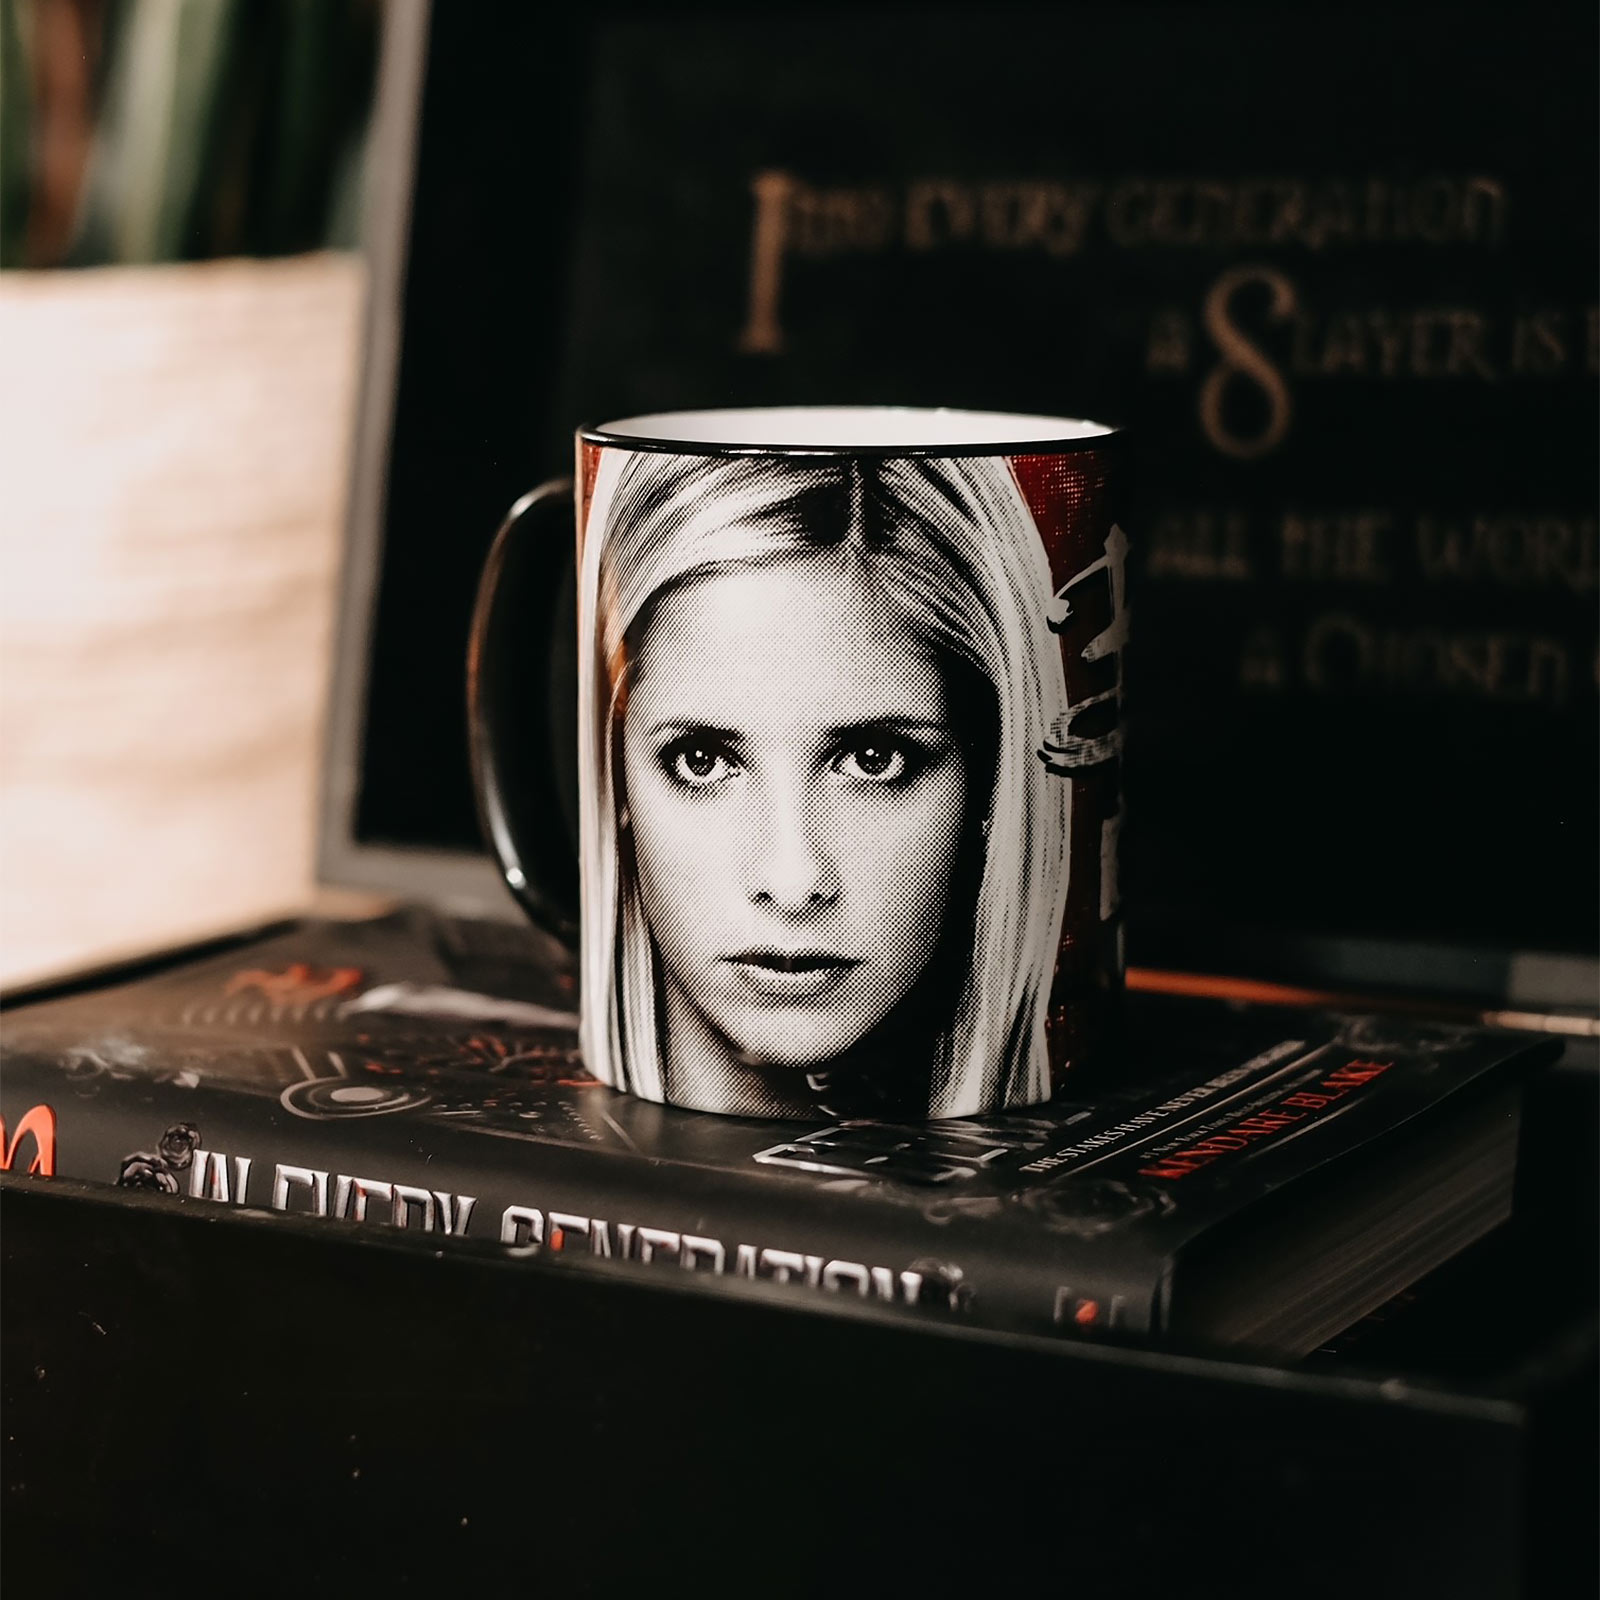 Vampire Slayer mok voor Buffy-fans